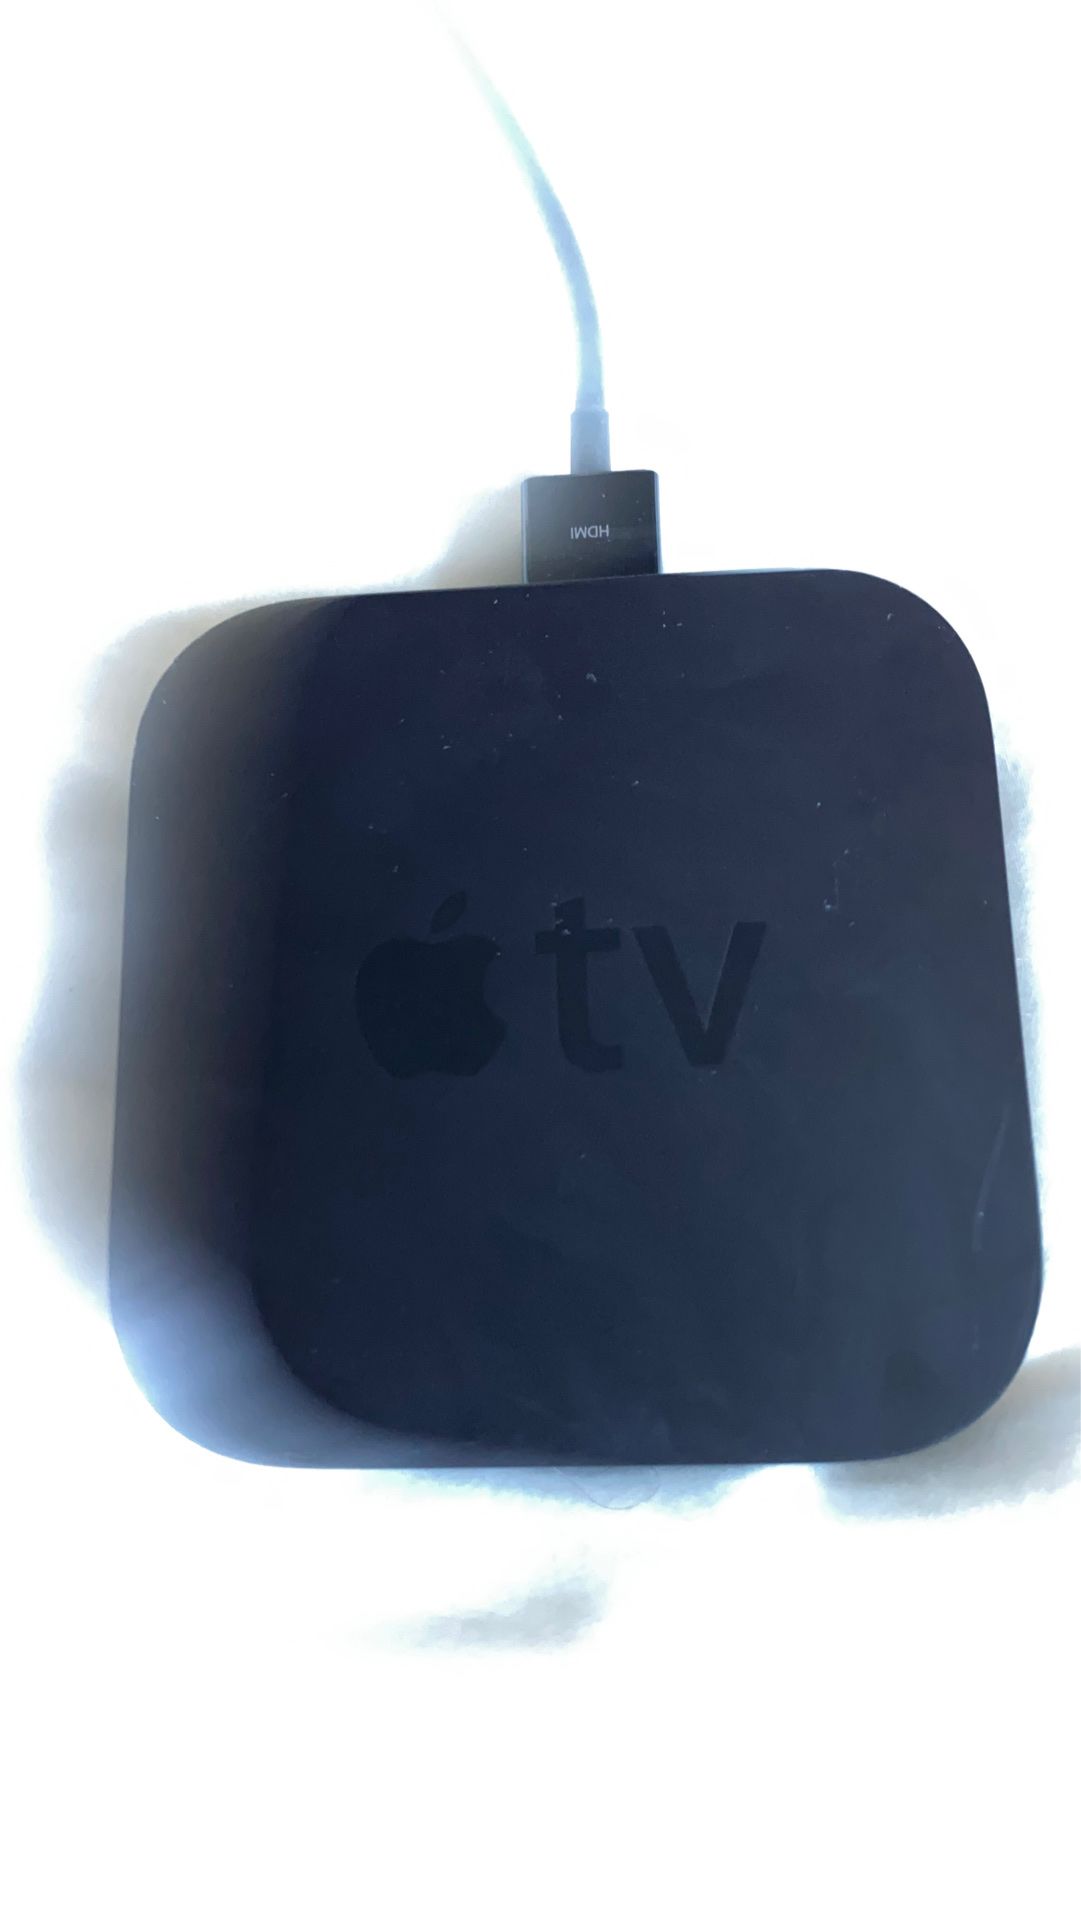 Apple TV (3rd generation)